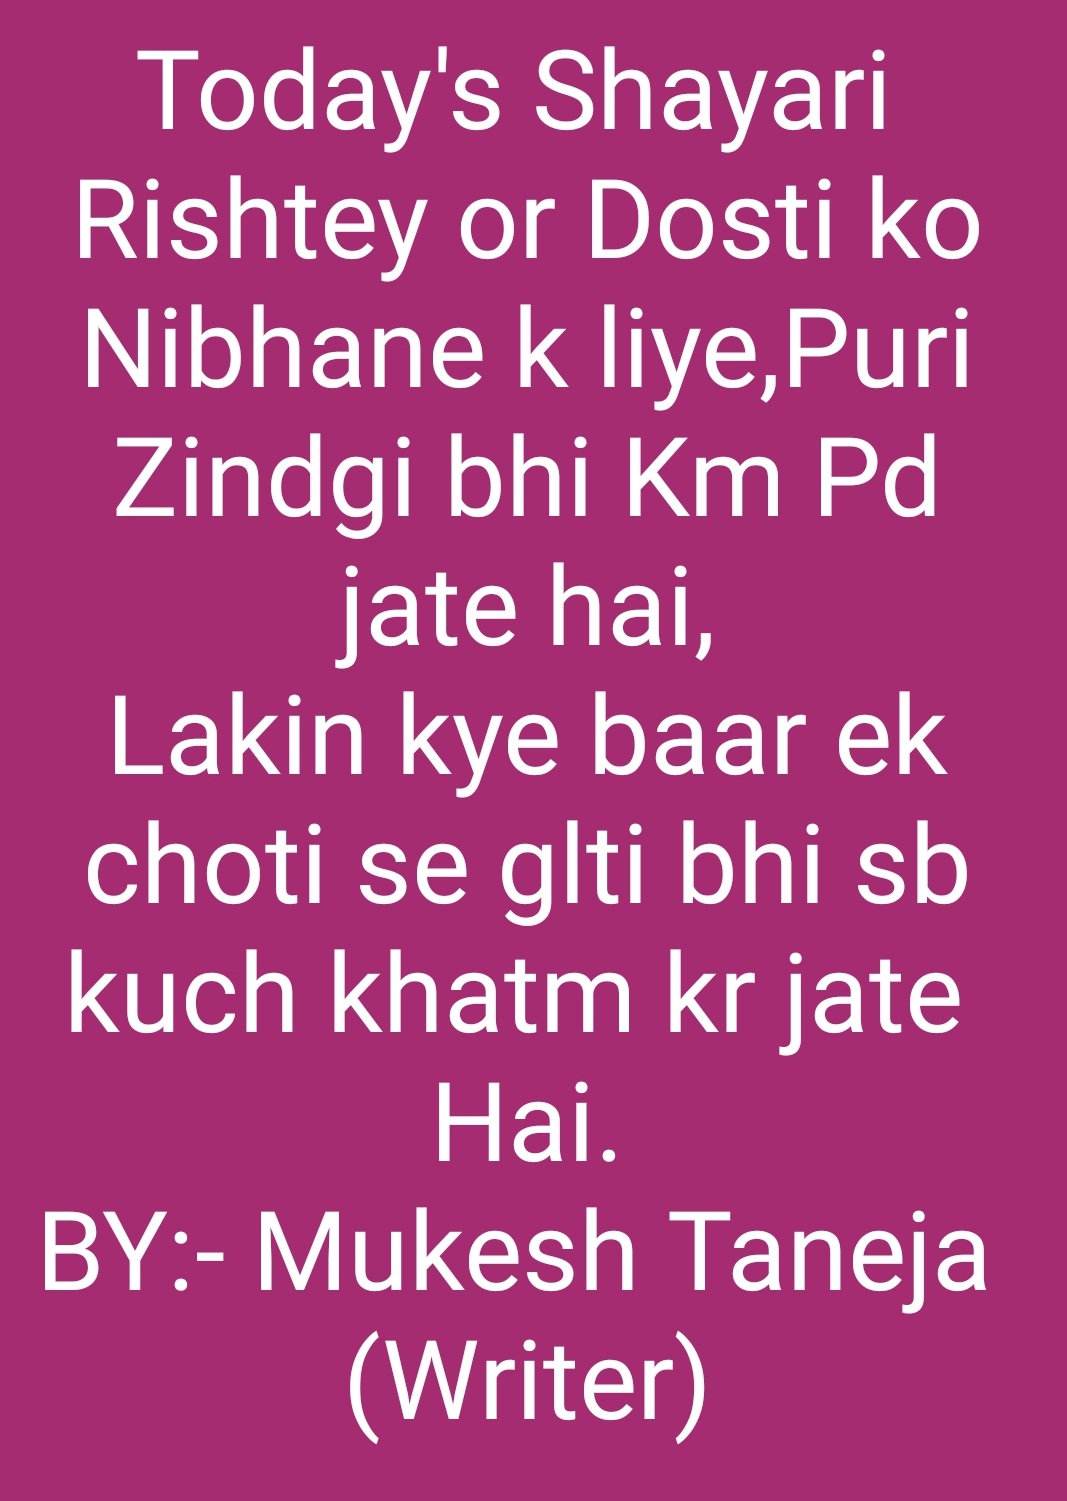 बेहतरीन और अनोखी शायरी (अपने दिल को छूएं) Best and Unique Shayari (Touch on your Heart) Write by:- Mukesh Taneja